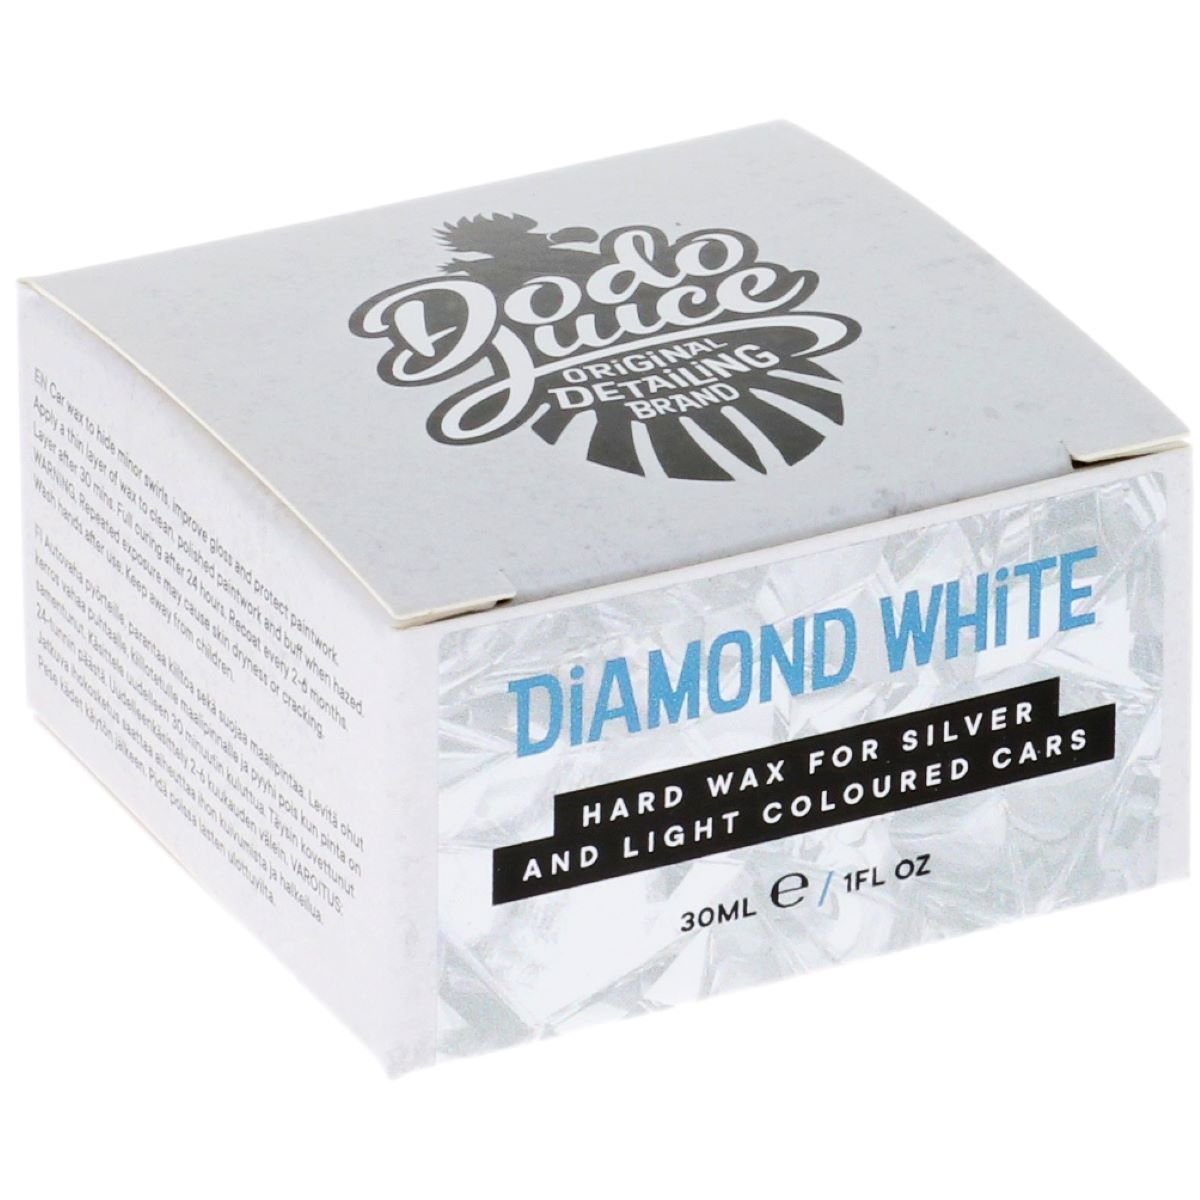 Diamond White hard wax for light coloured cars - 30ml